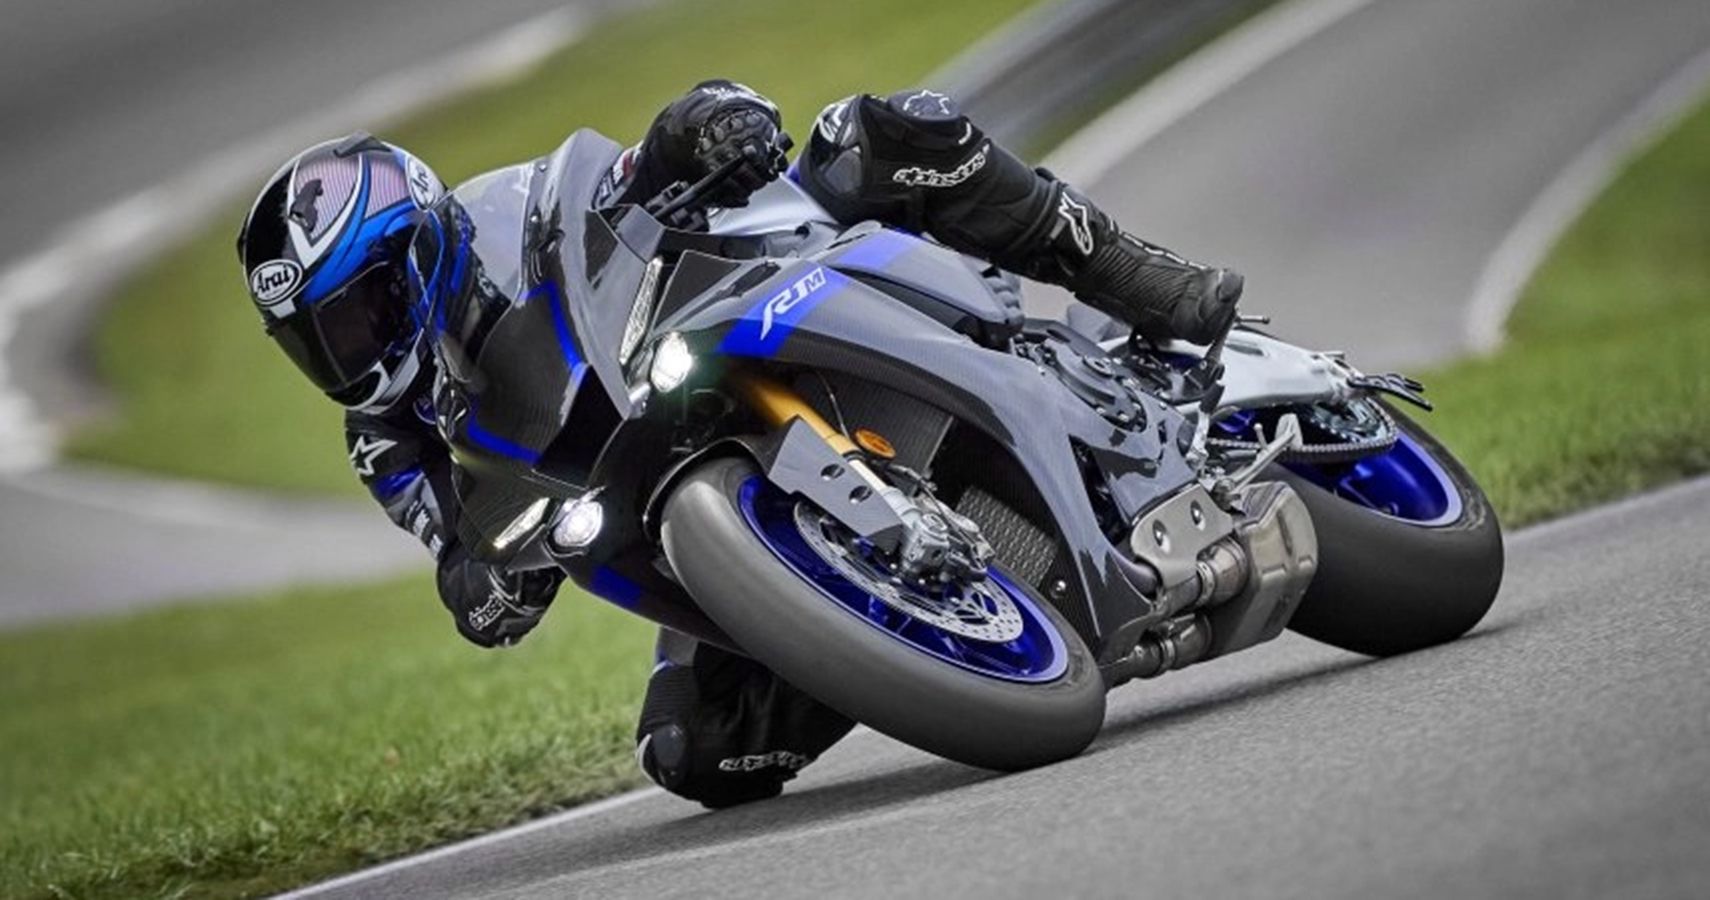 Black and blue Japanese motorcycle turning on track